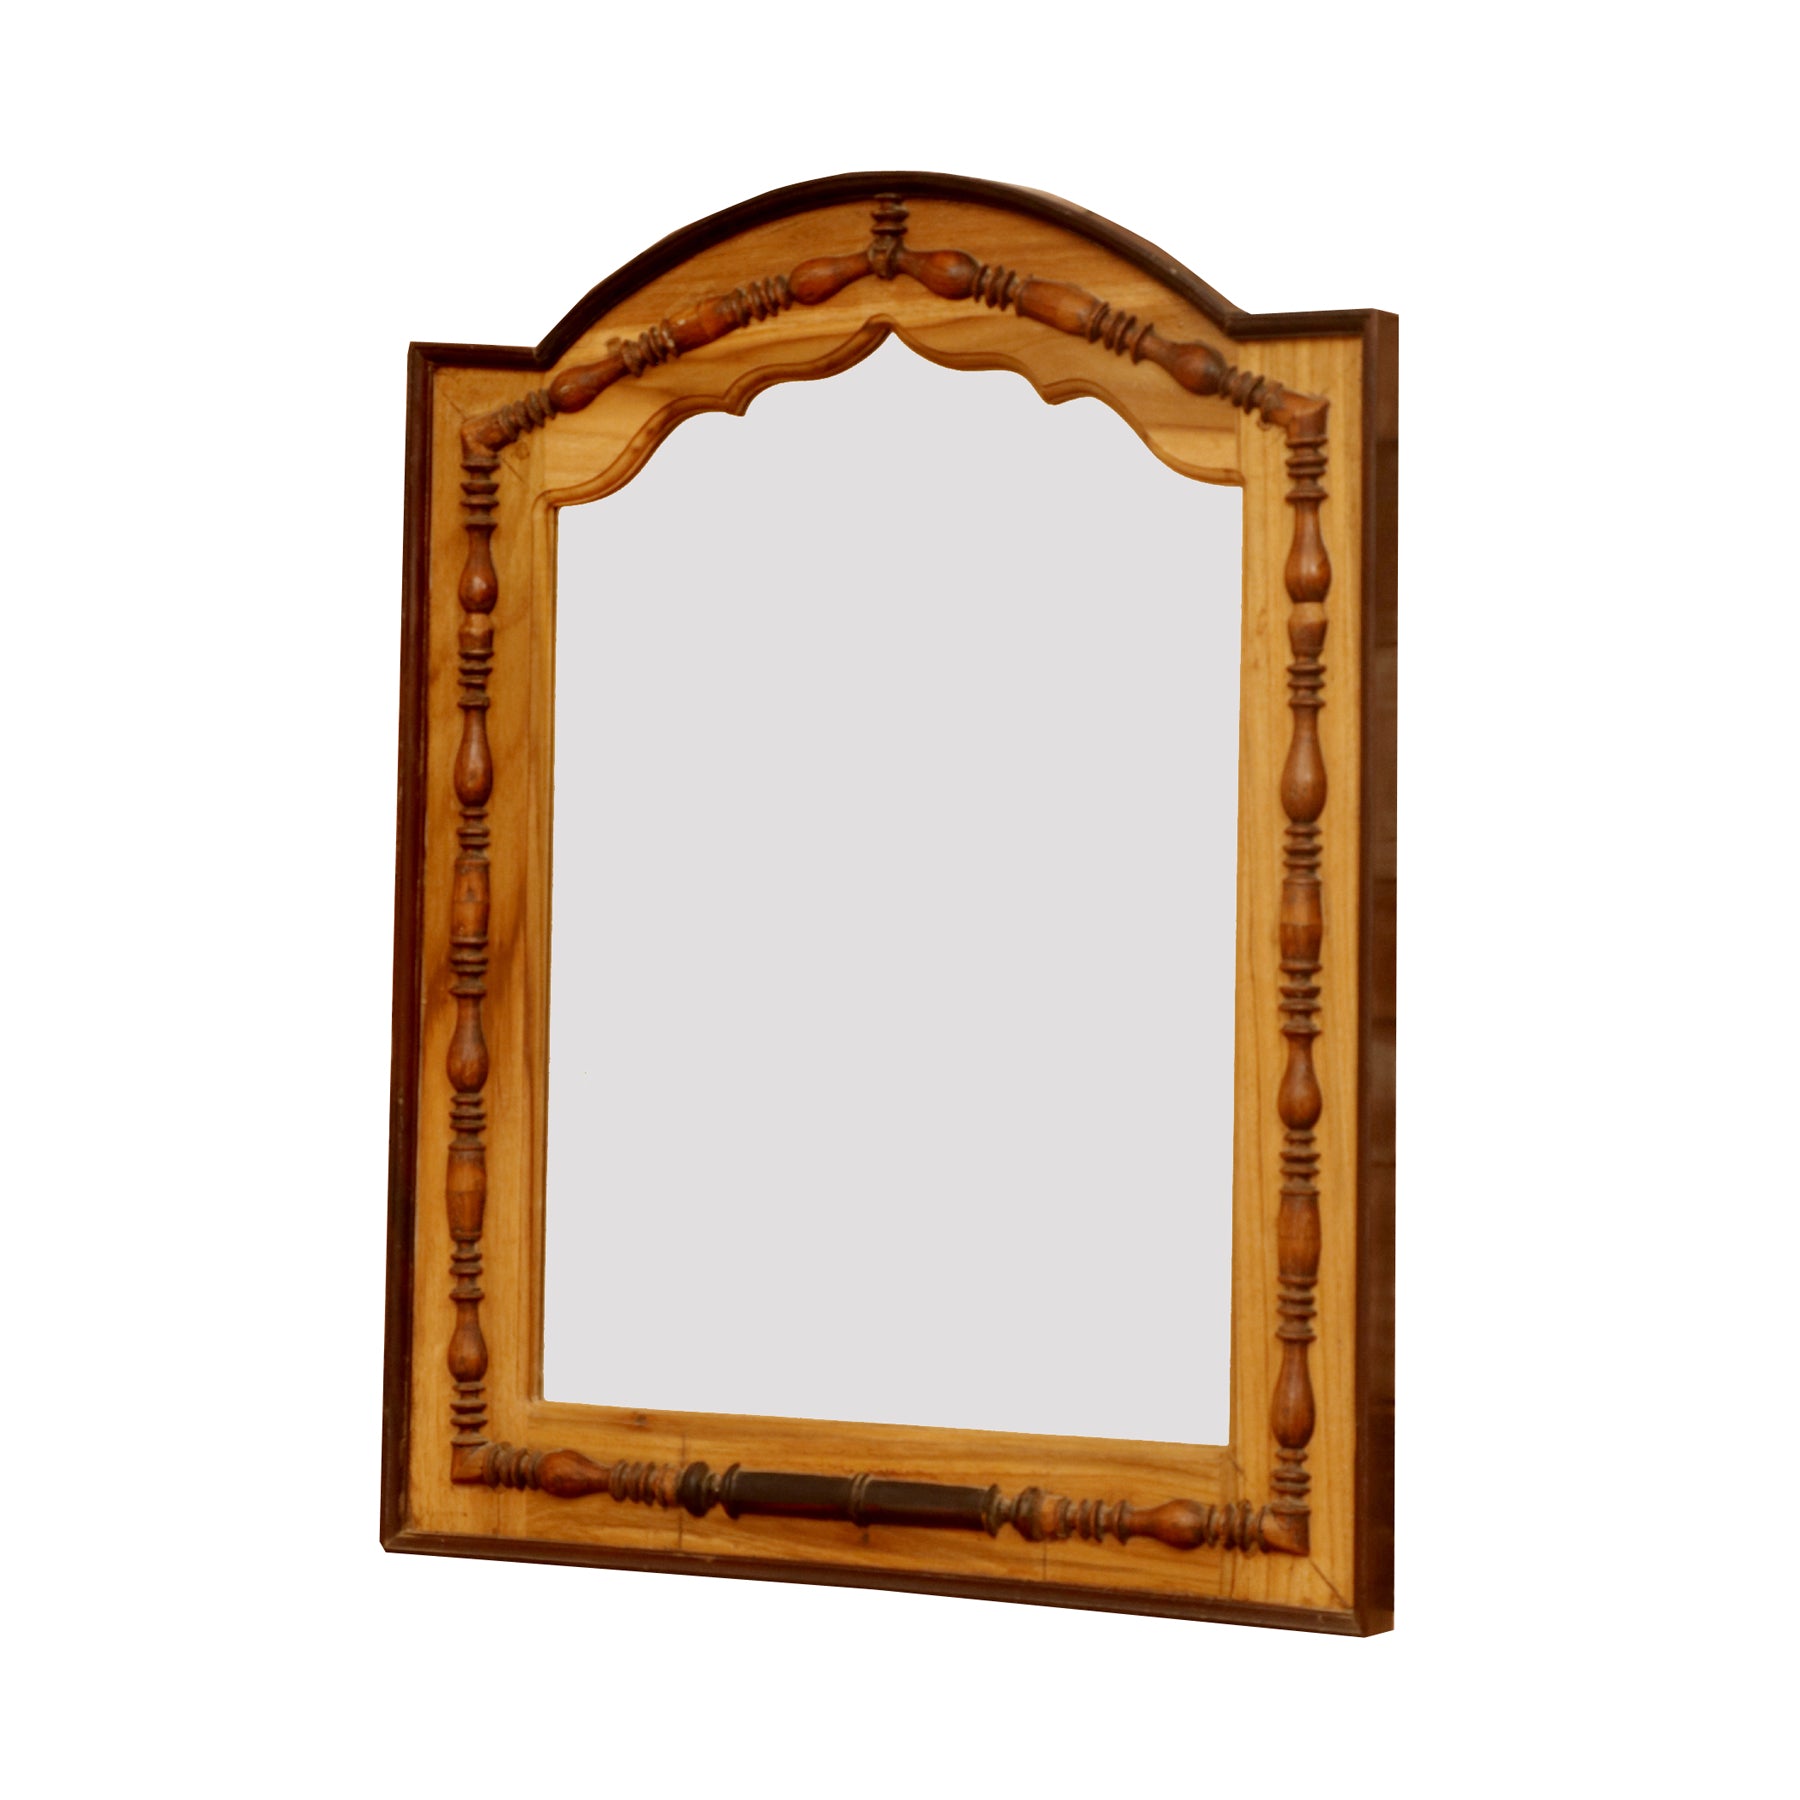 Sophisticated Jharokha Mirror Frame Mirror